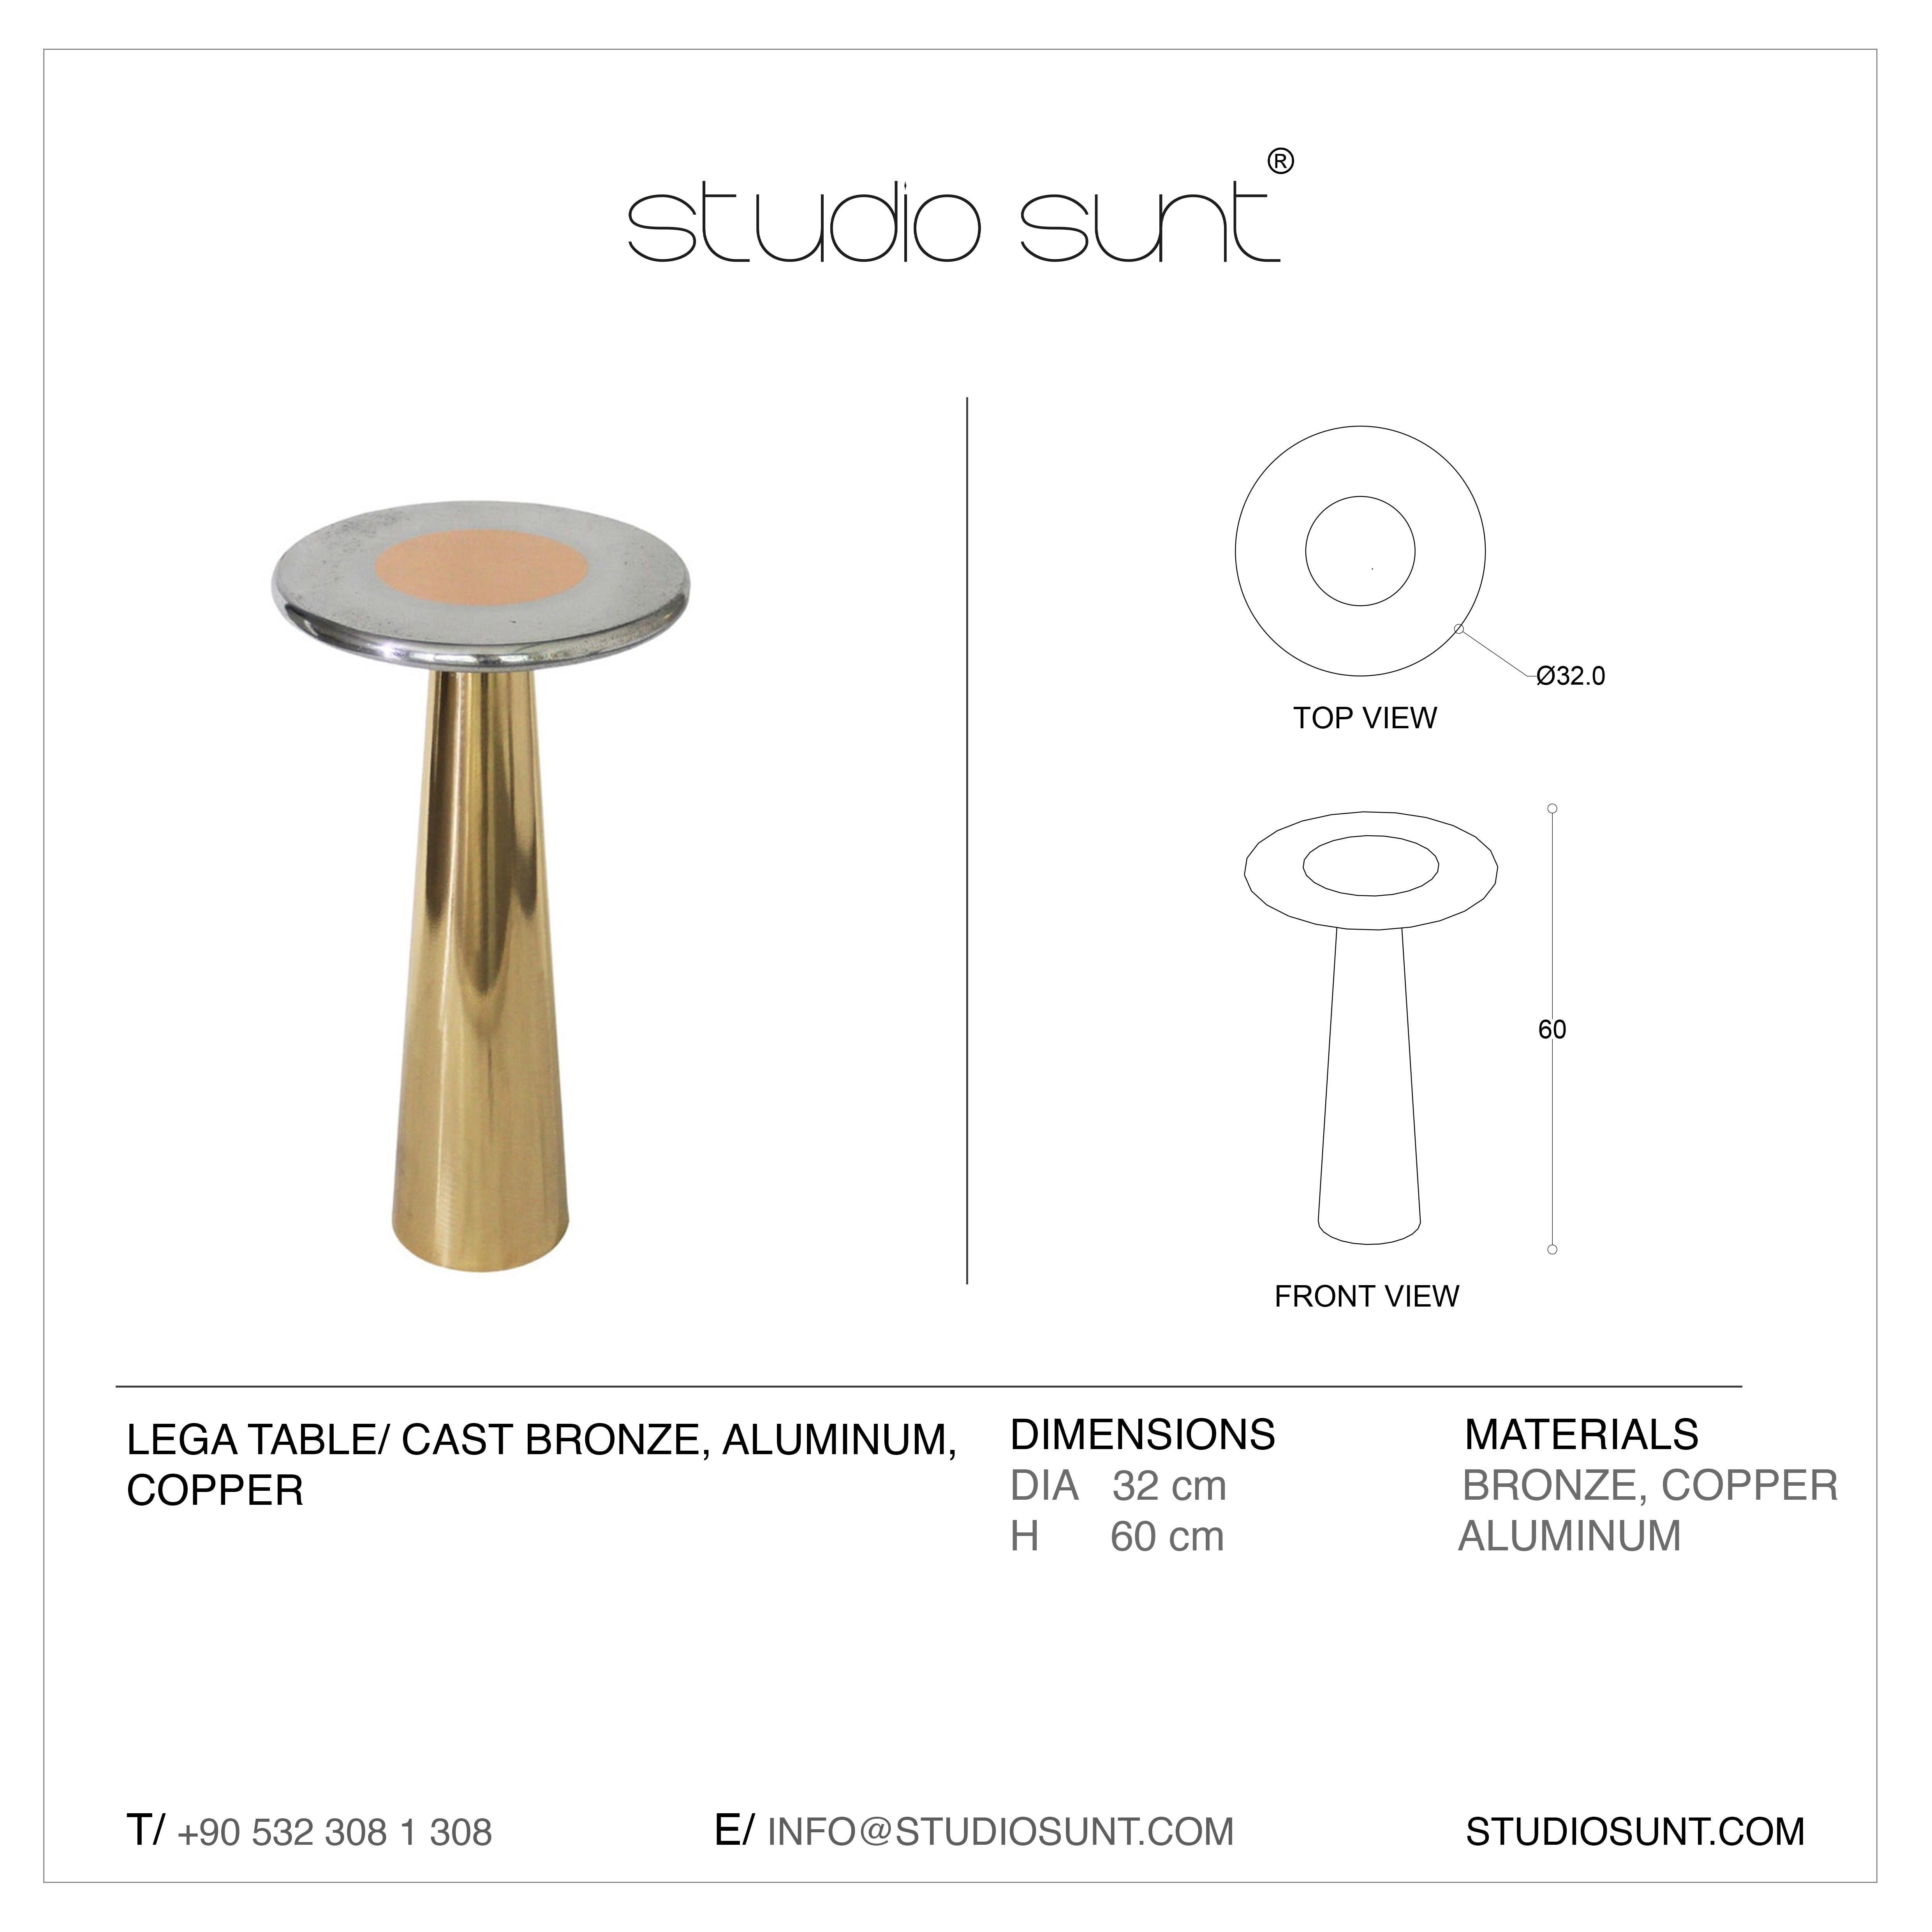 Cast Bronze, Aluminum and Copper Lega Side Table by Studio Sunt For Sale 13